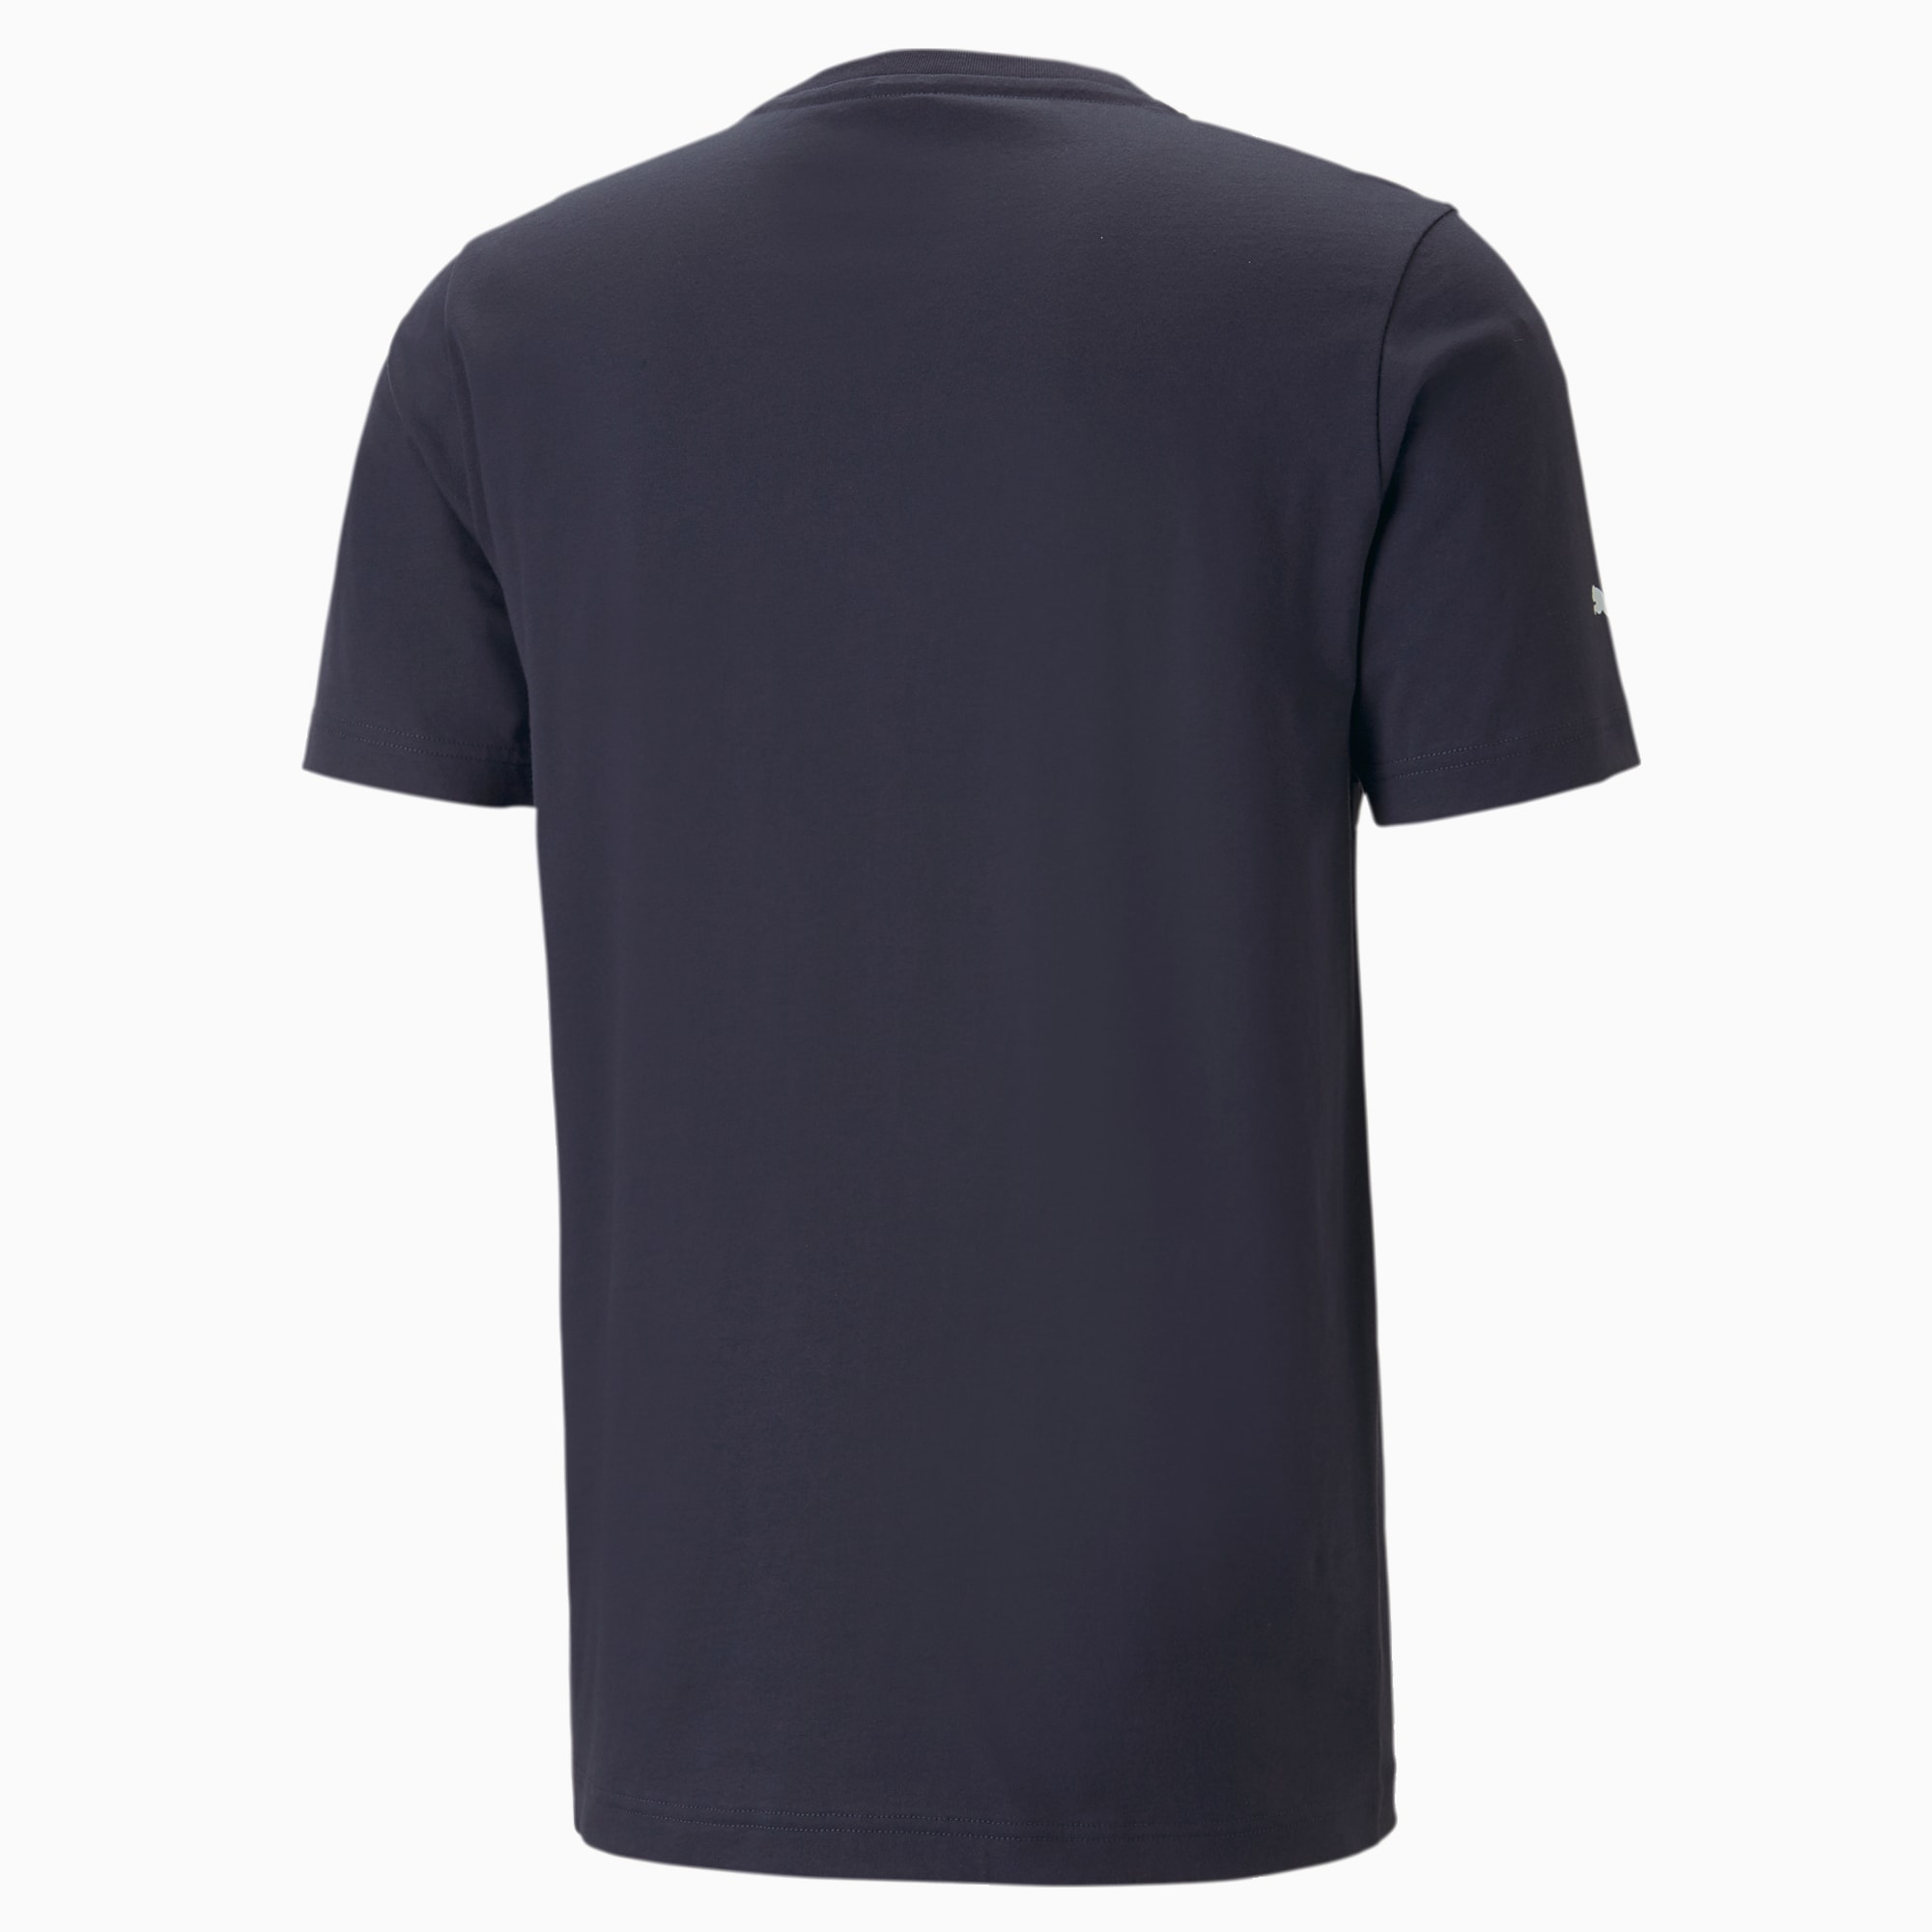 Ferrari T-Shirt Men's Size Medium Navy Blue